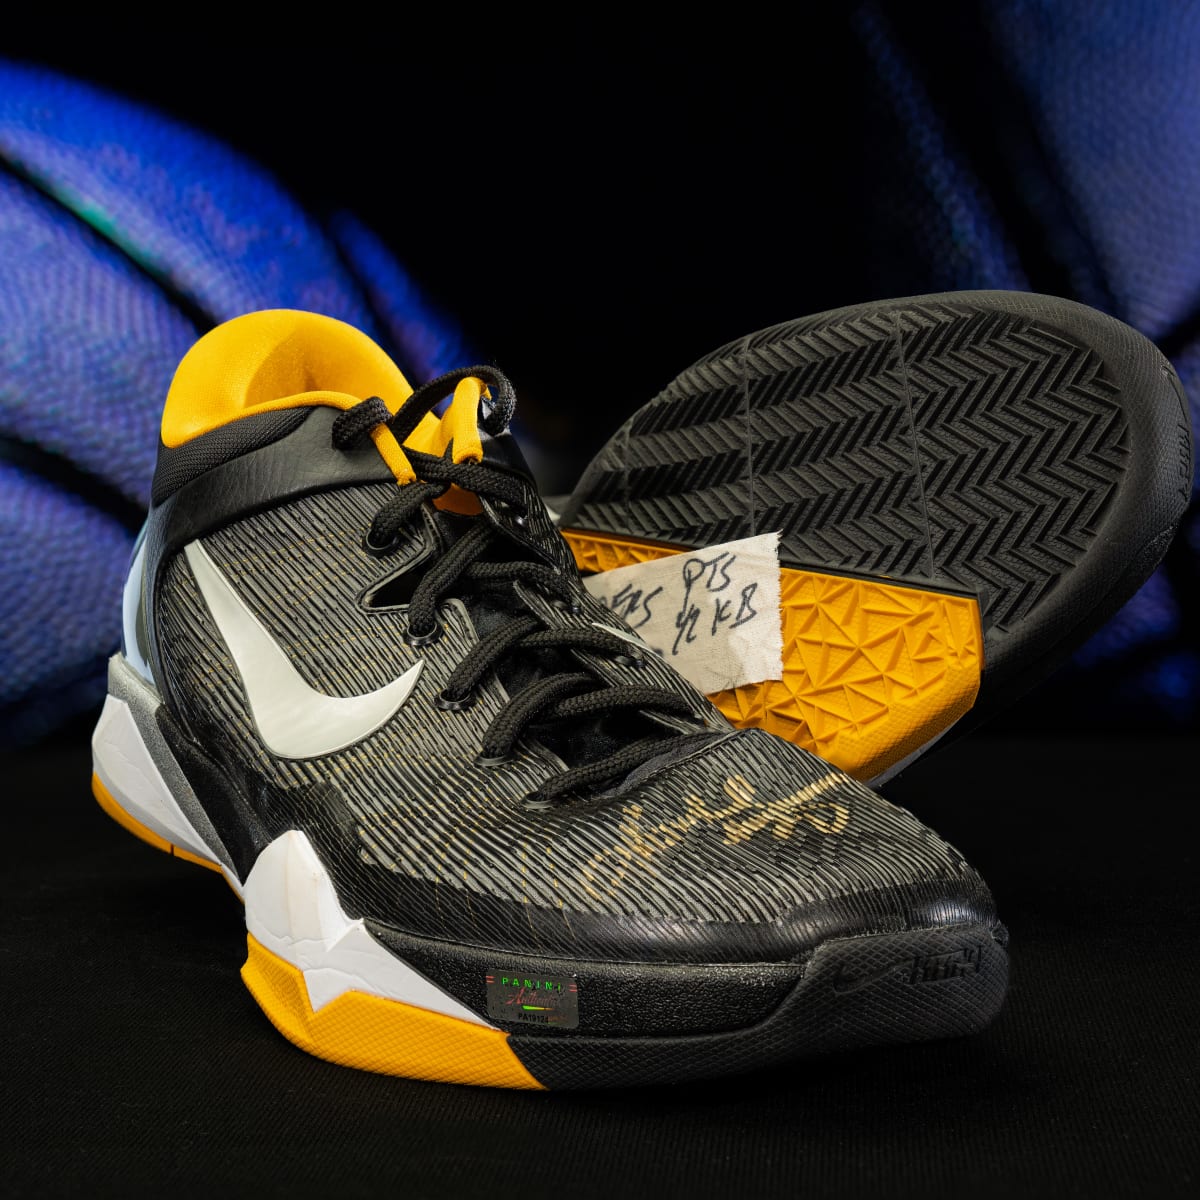 Kobe Bryant's Game-Worn Nike Shoes Hit Auction Block - Sports